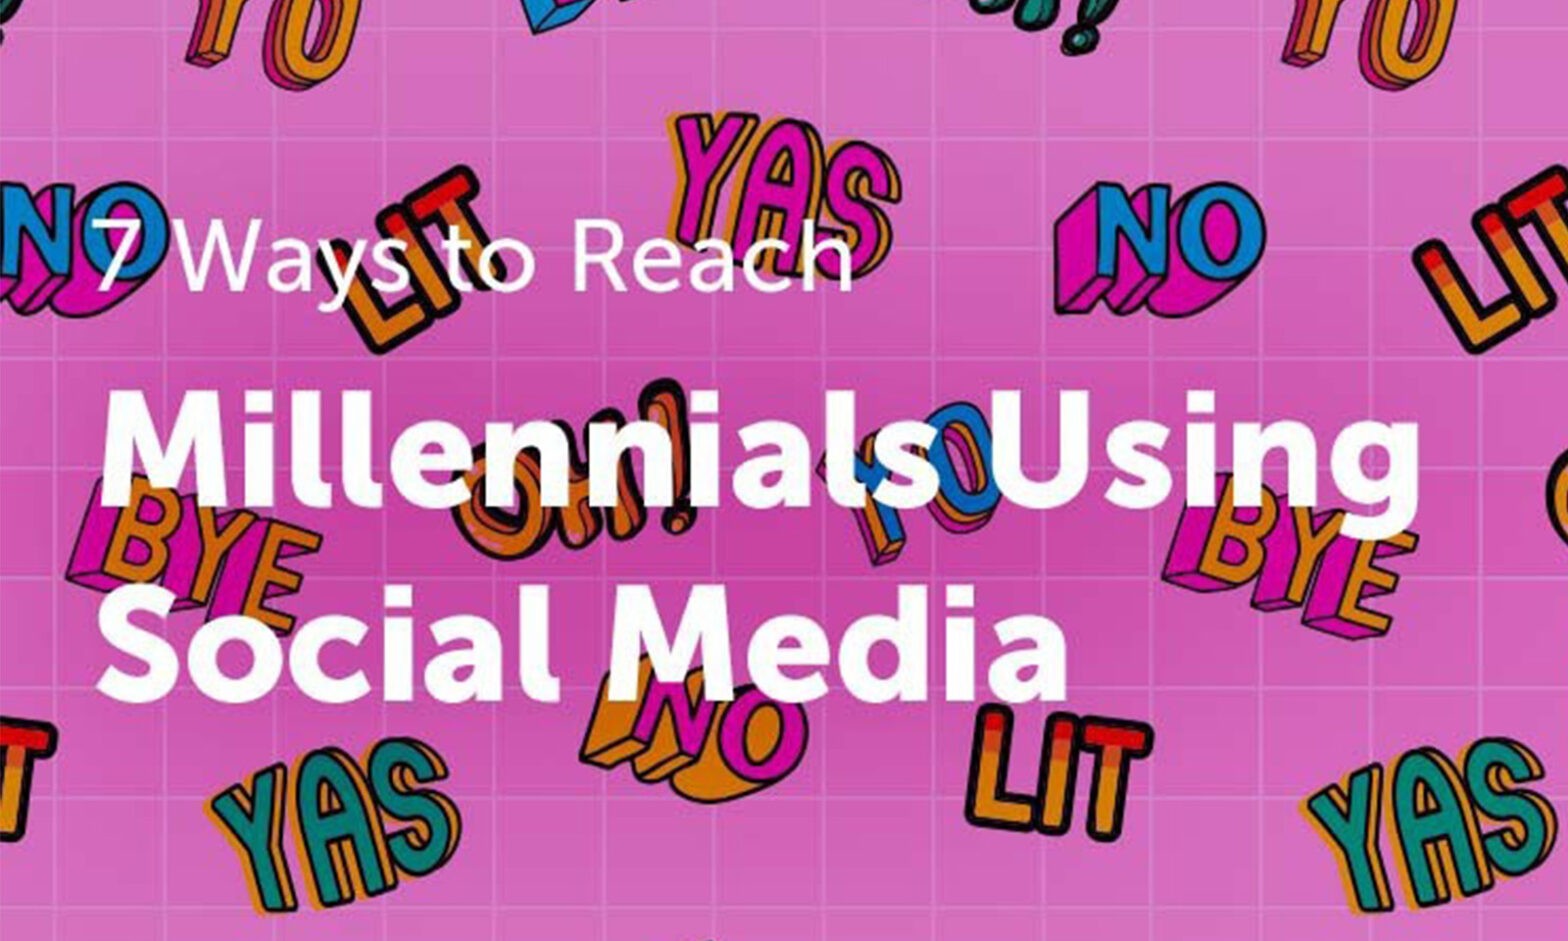 7 Ways to Reach and Influence Millennials Using Social Media Marketing